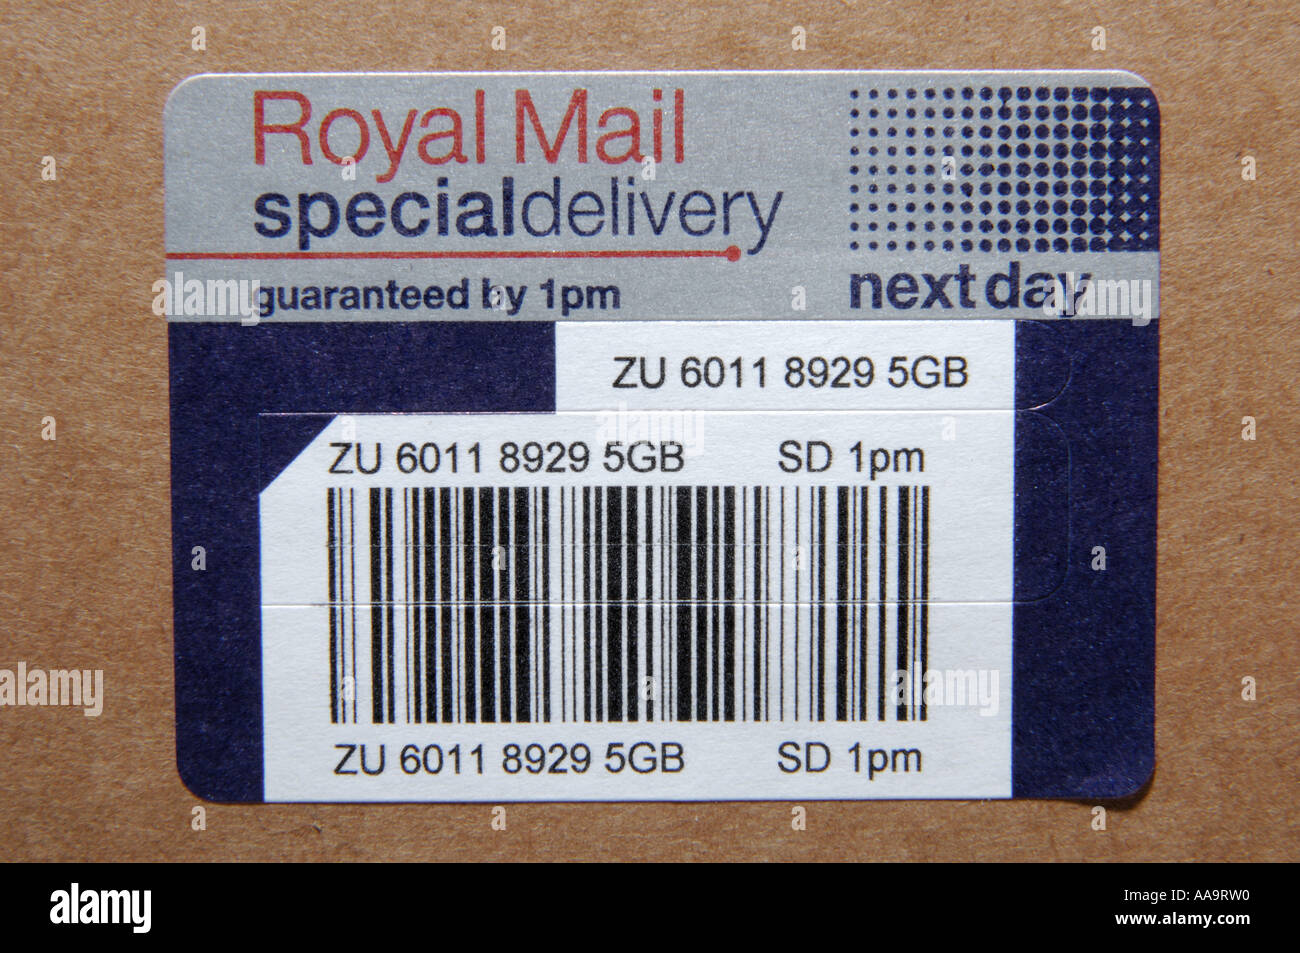 royal mail tracking - photo #38